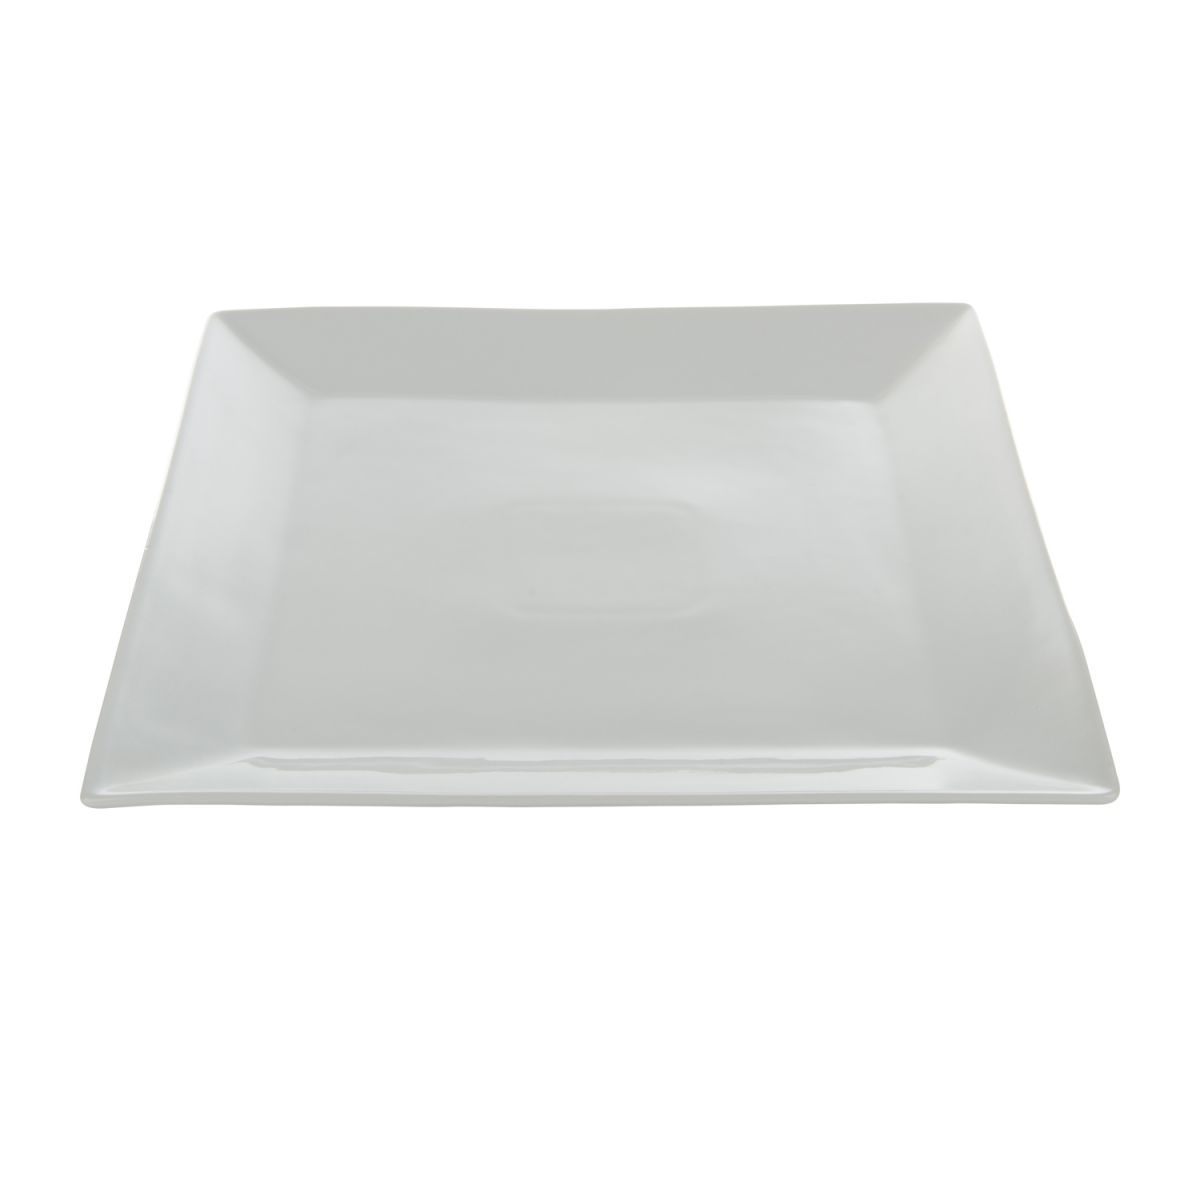 plate square 31 x 31 cm box4